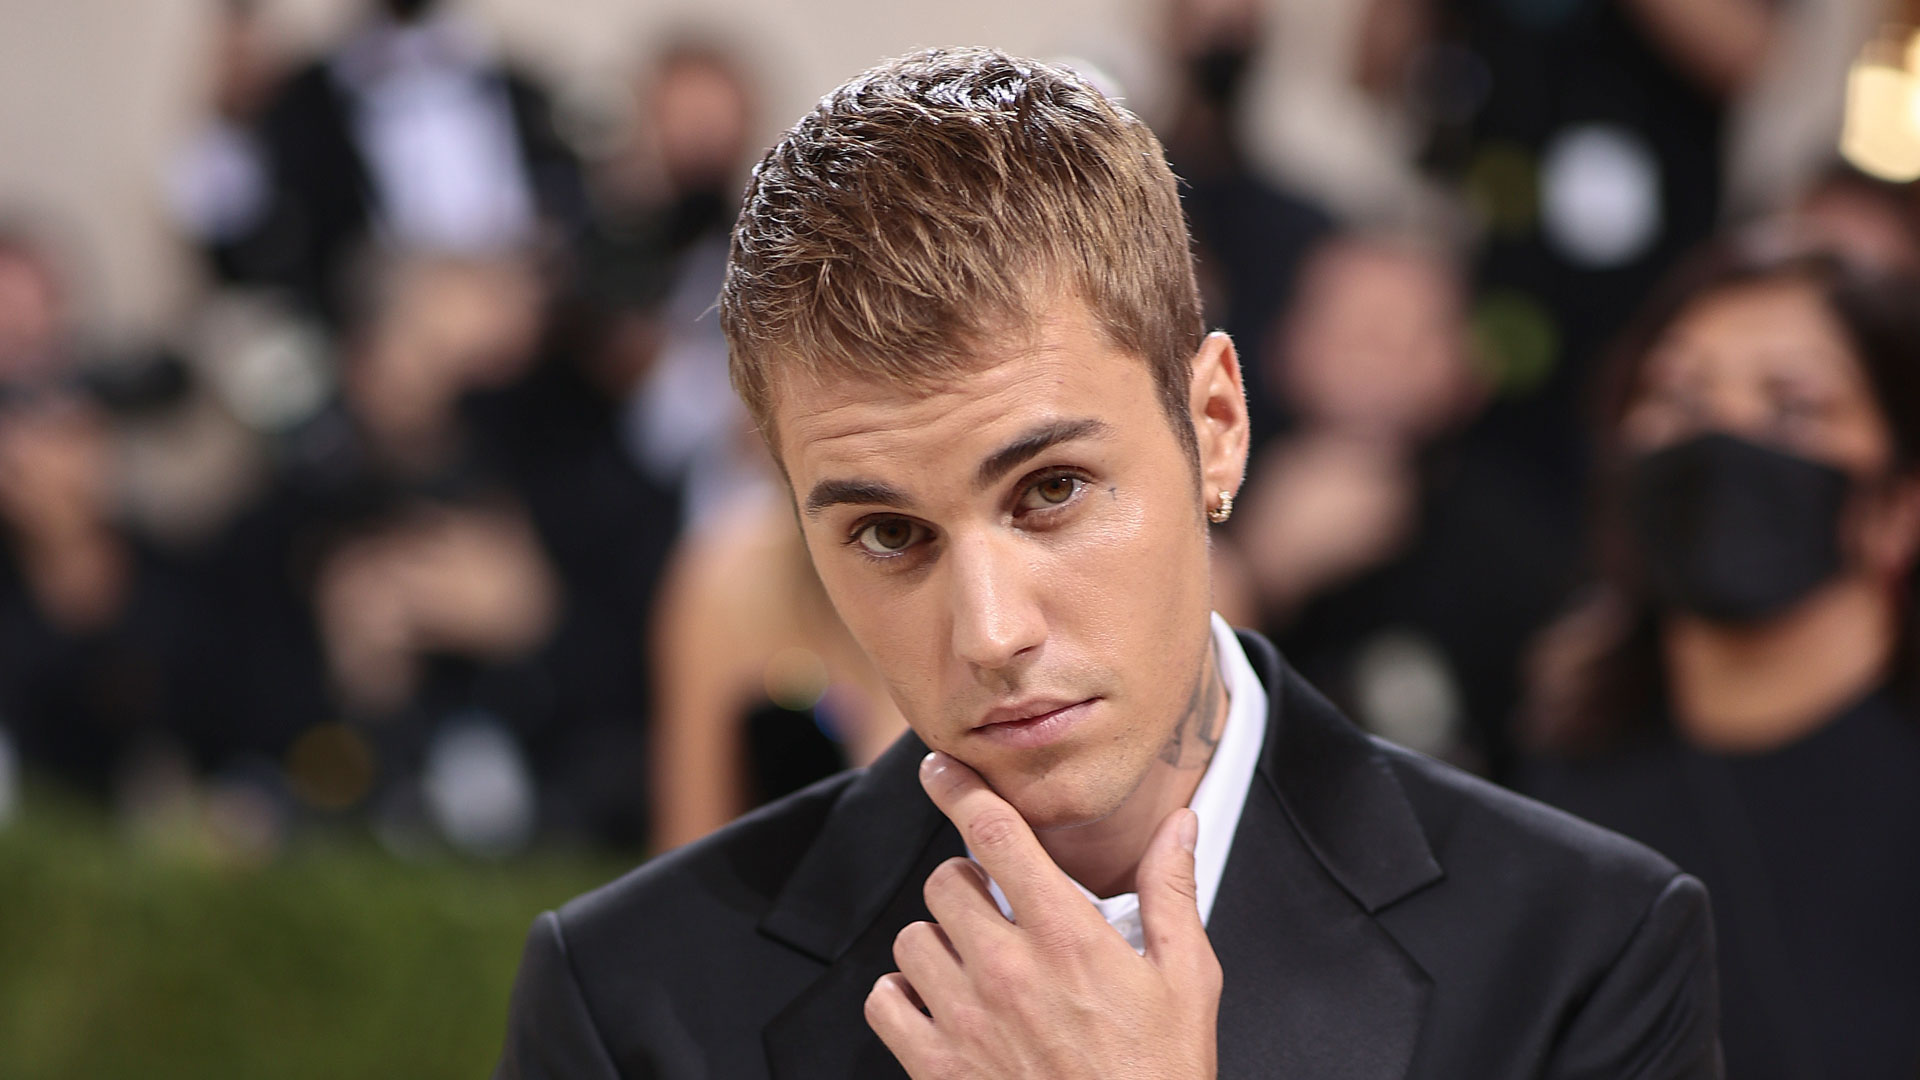 Justin Bieber Hairstyle  Celebrity Hair For Men  Long Forward Undercut   YouTube